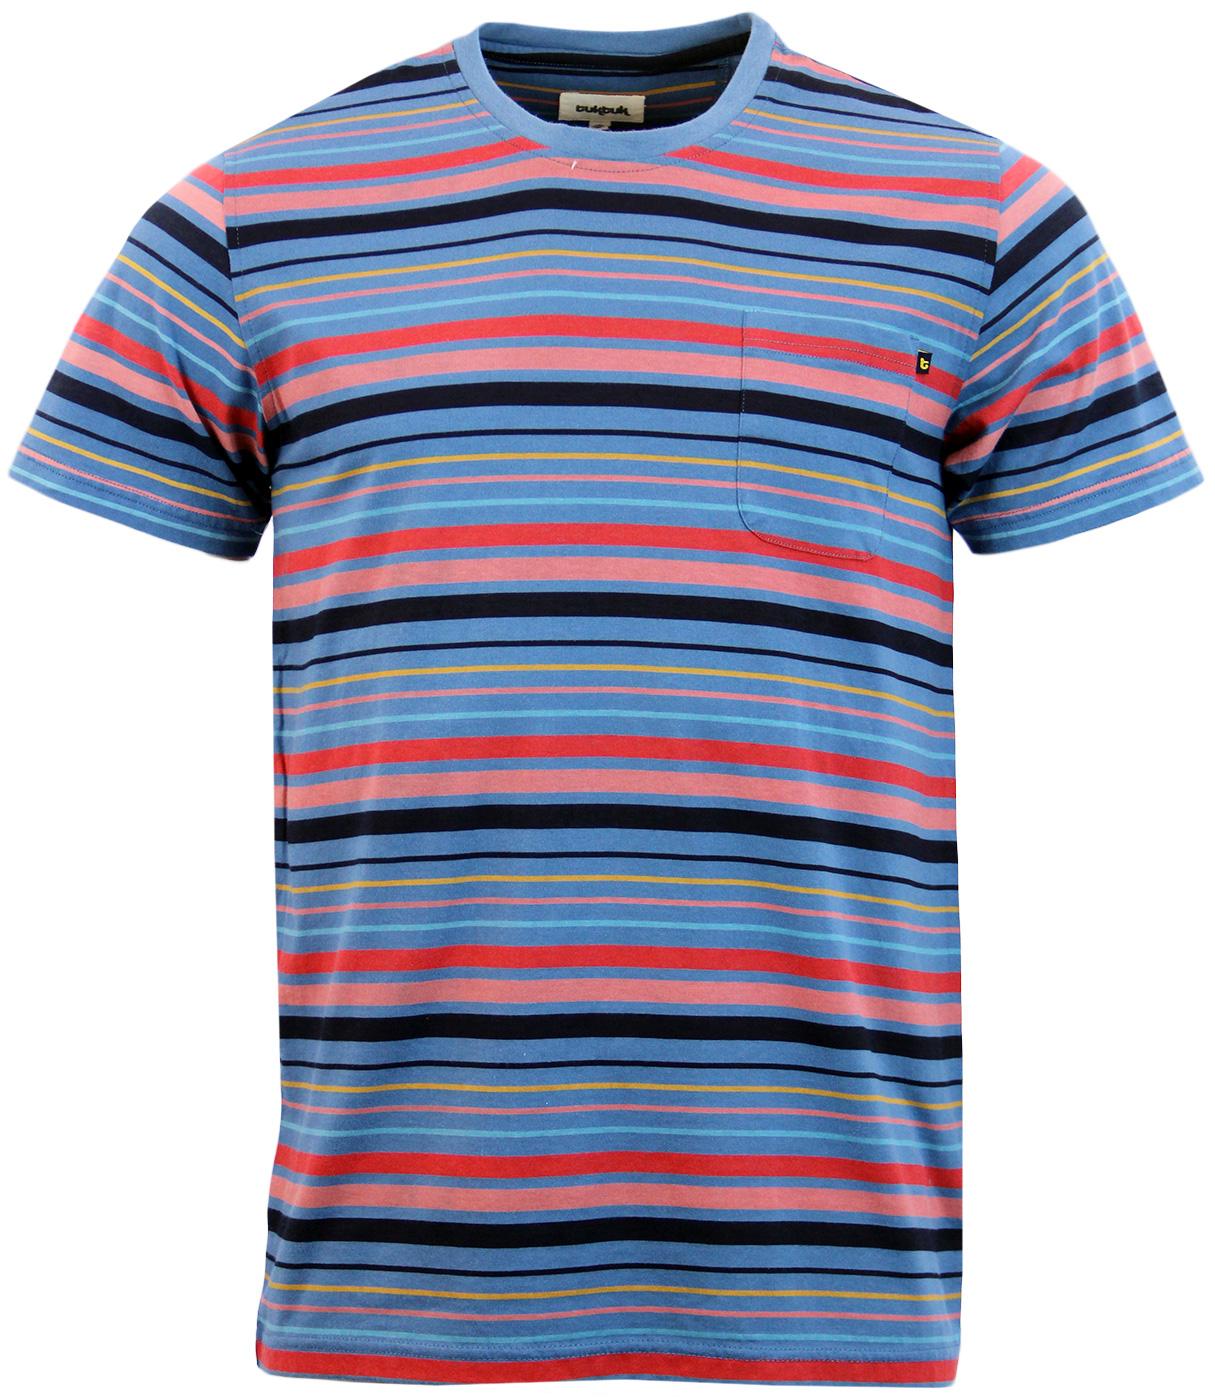 TUKTUK Retro Mod Crew Neck Classic Stripe Jersey T-Shirt in Blue